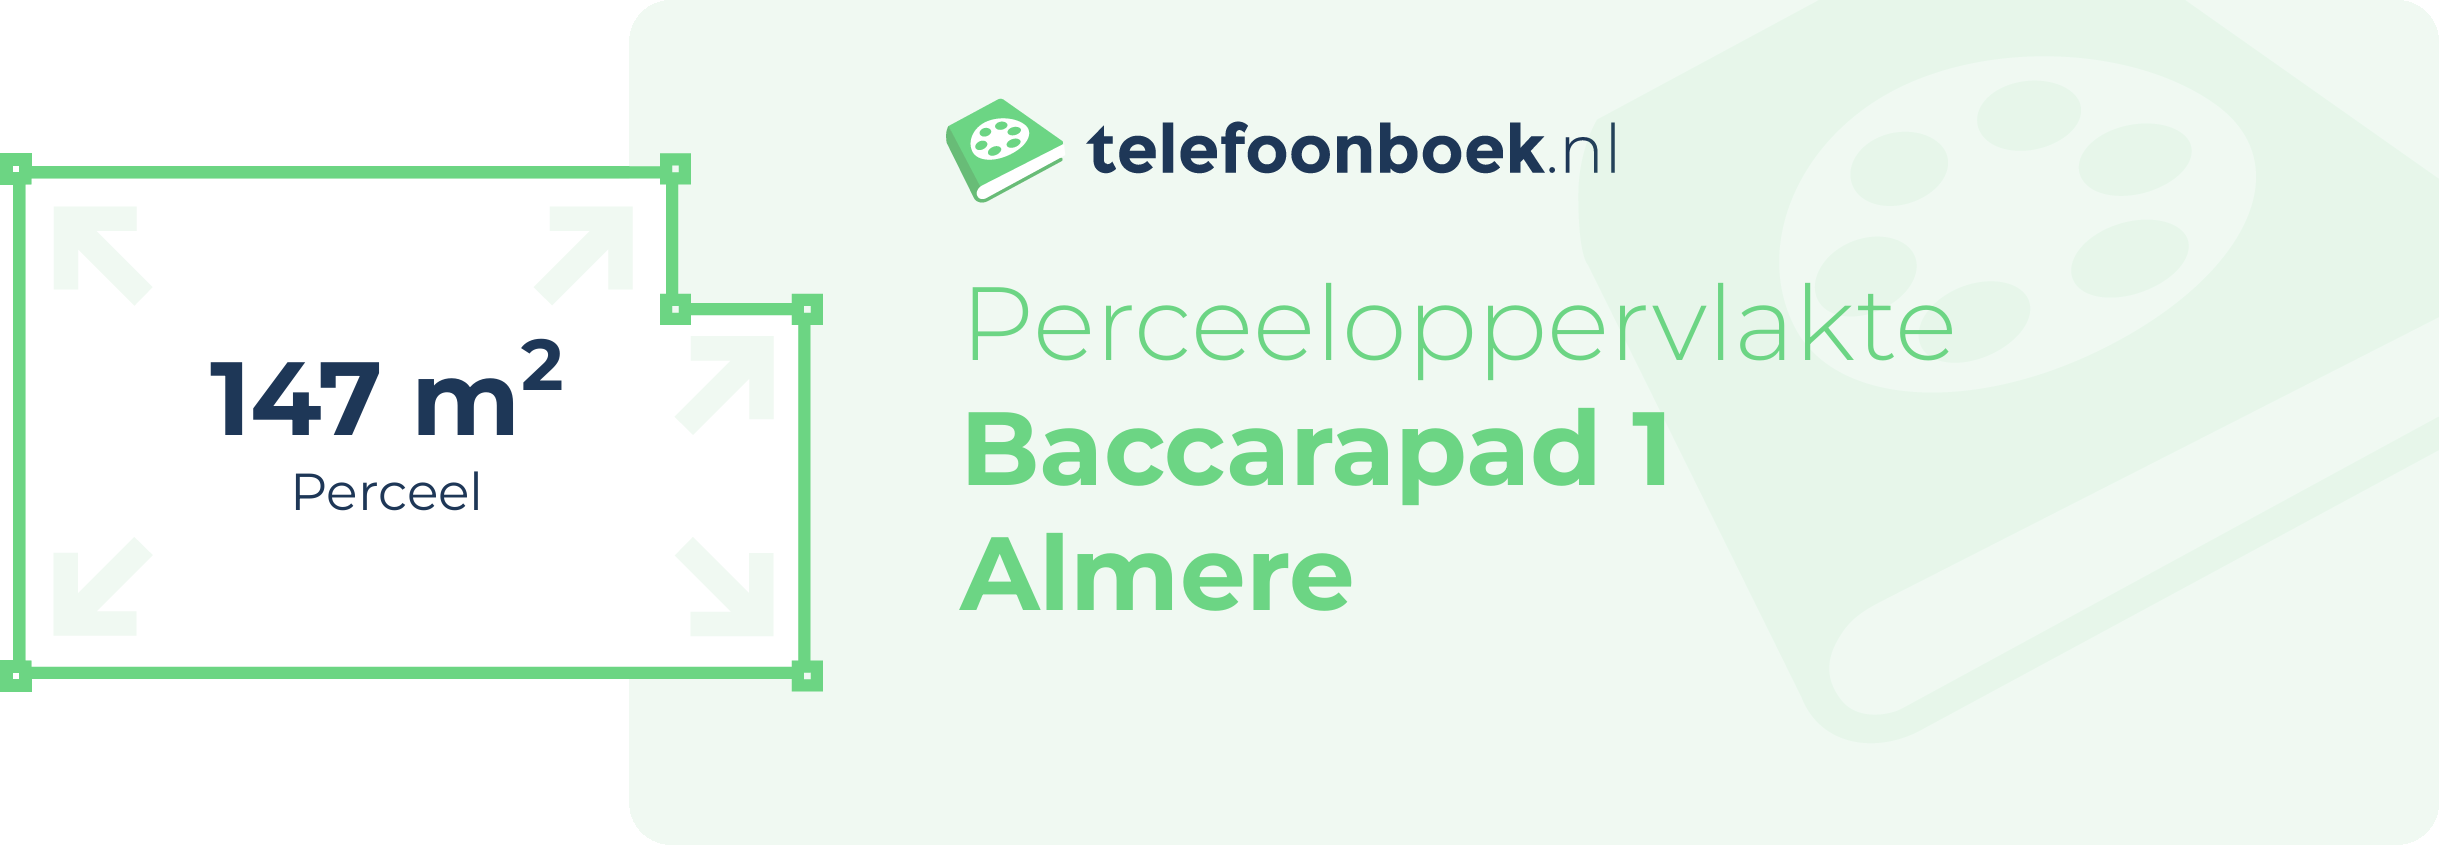 Perceeloppervlakte Baccarapad 1 Almere